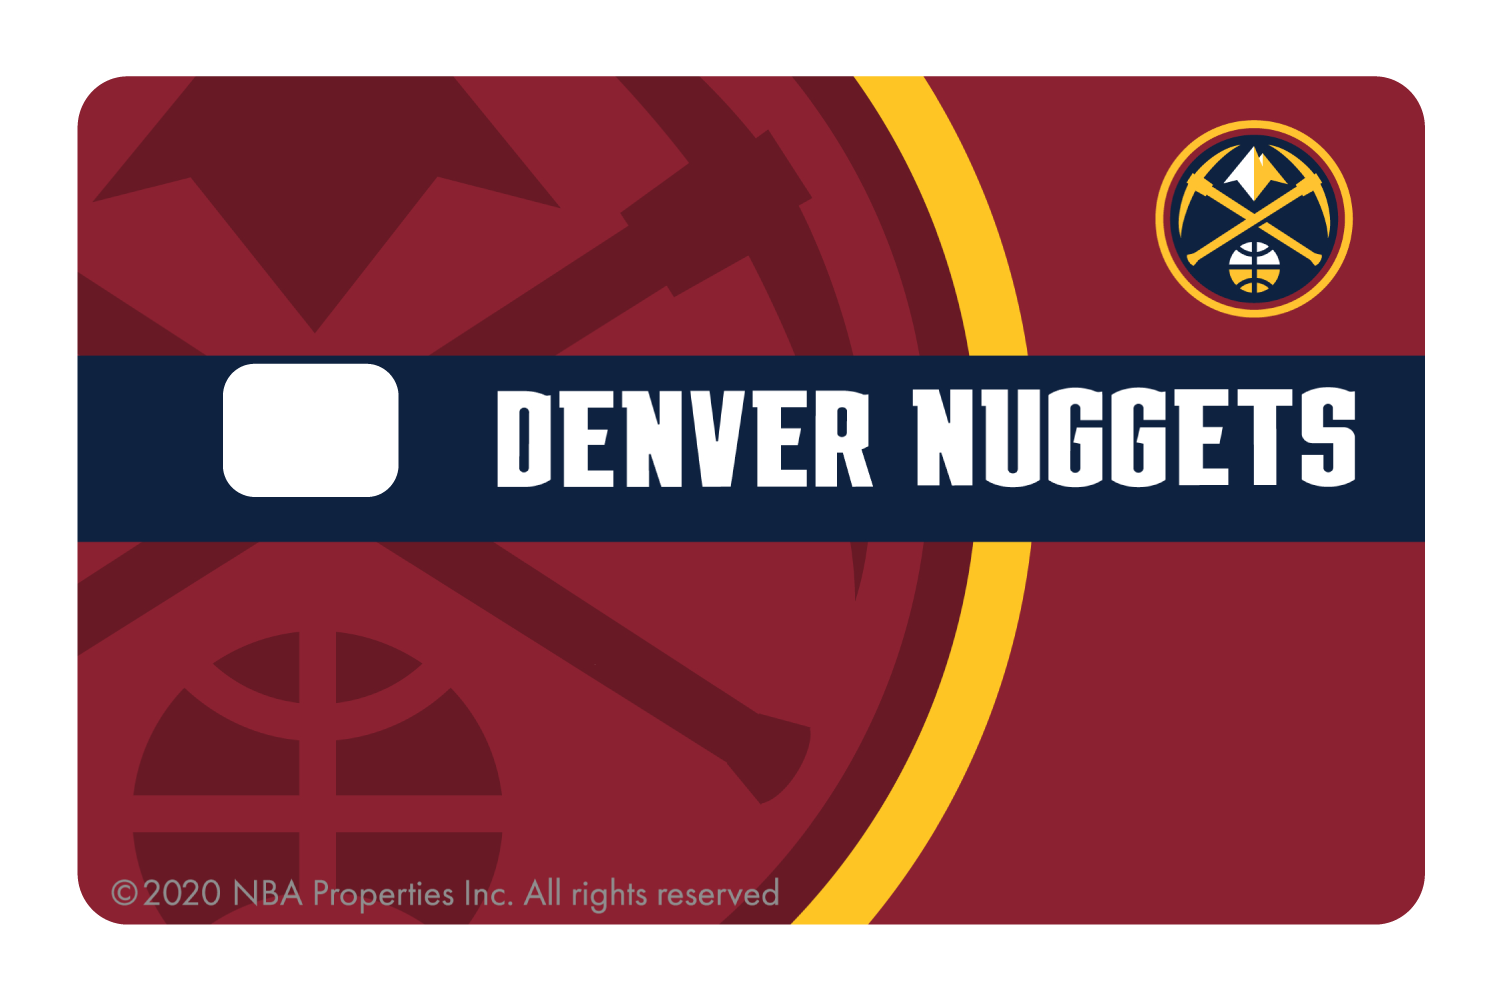 Denver Nuggets: Midcourt